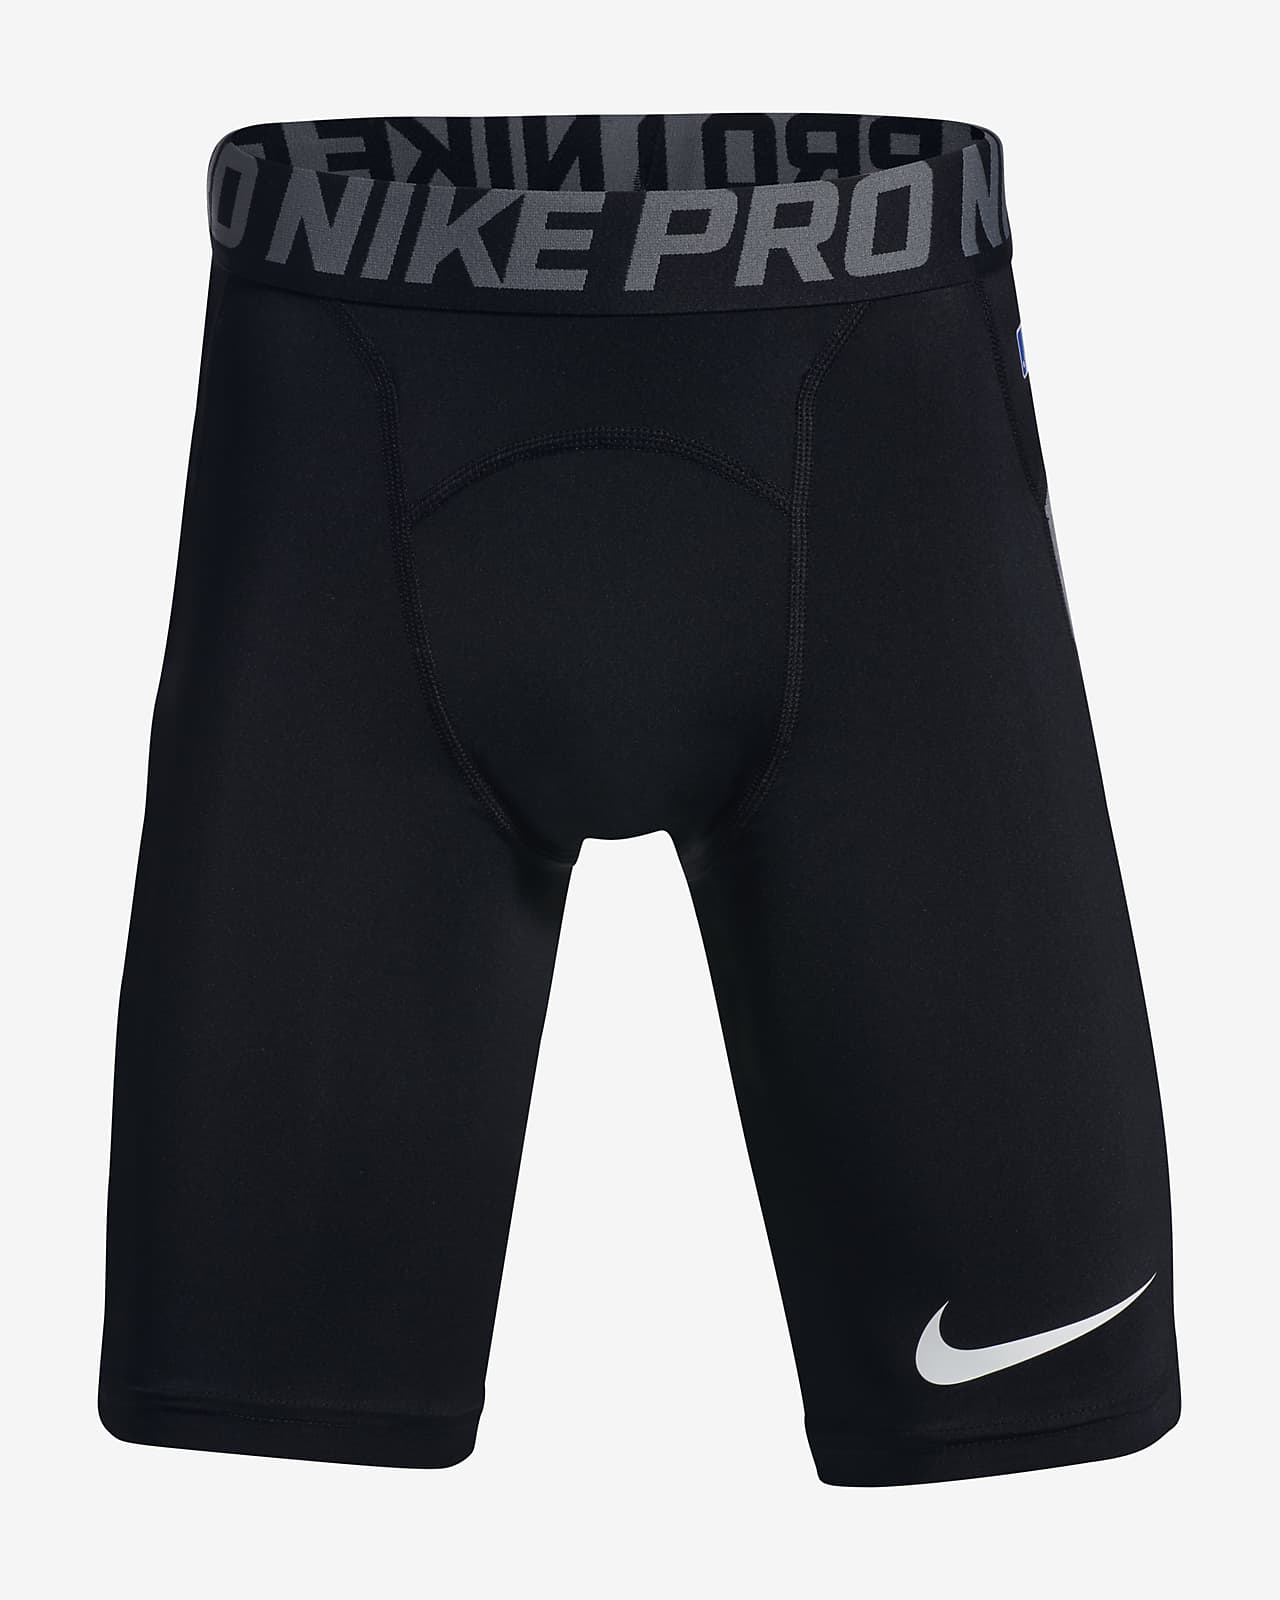 Nike Pro Heist Slider Big Kids' (Boys 